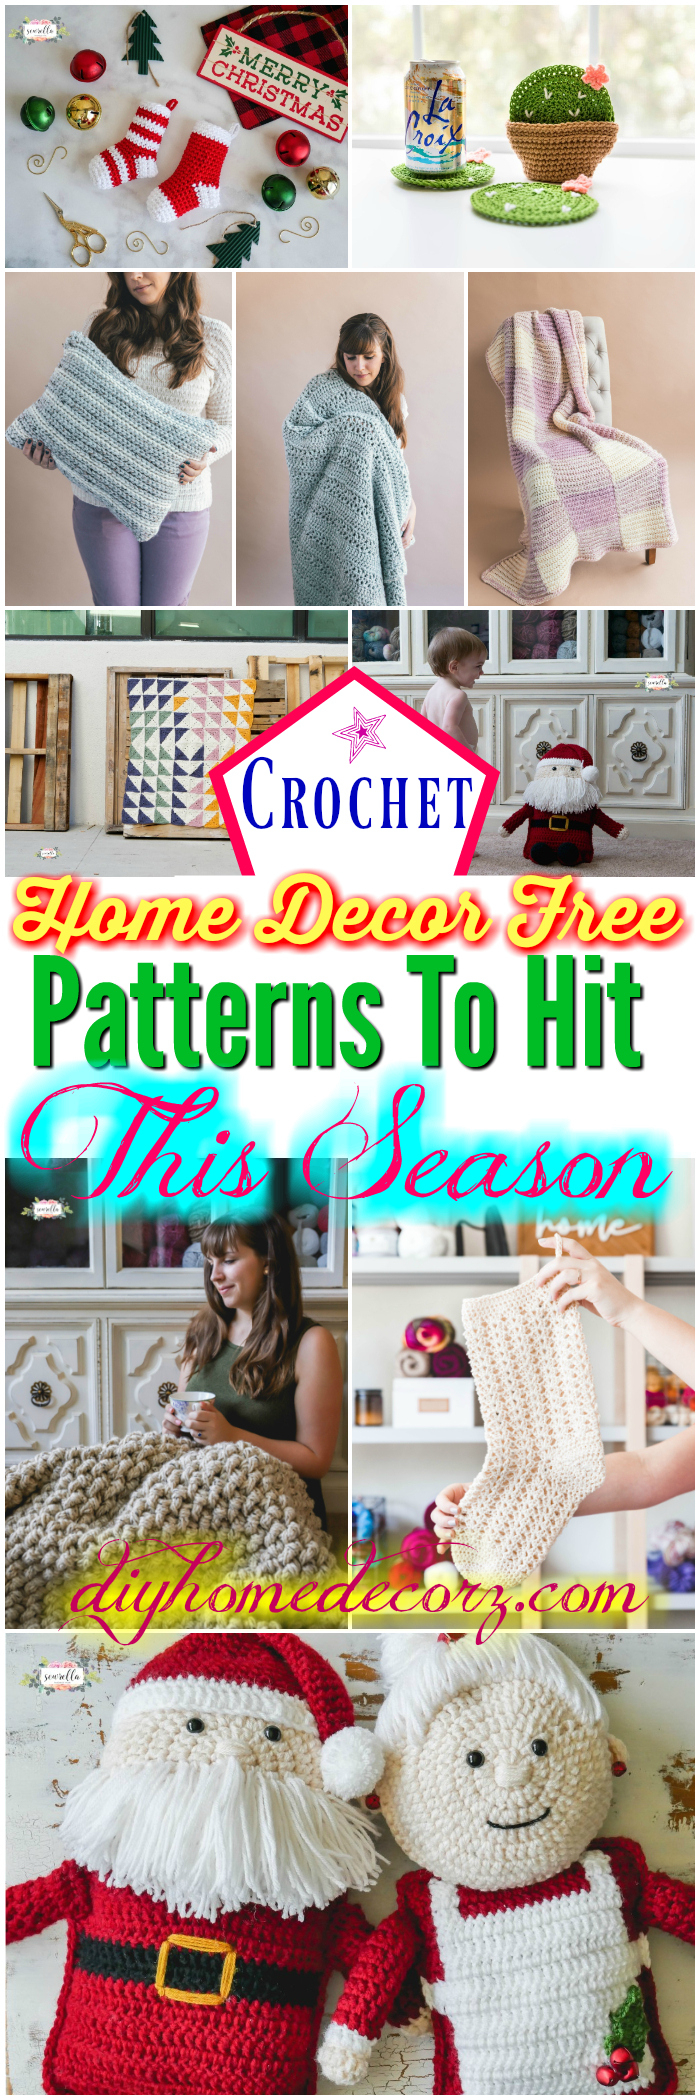 Crochet Home Decor Free Patterns Crochet Home Decor Free Patterns To Hit This Season Diy Home Decor